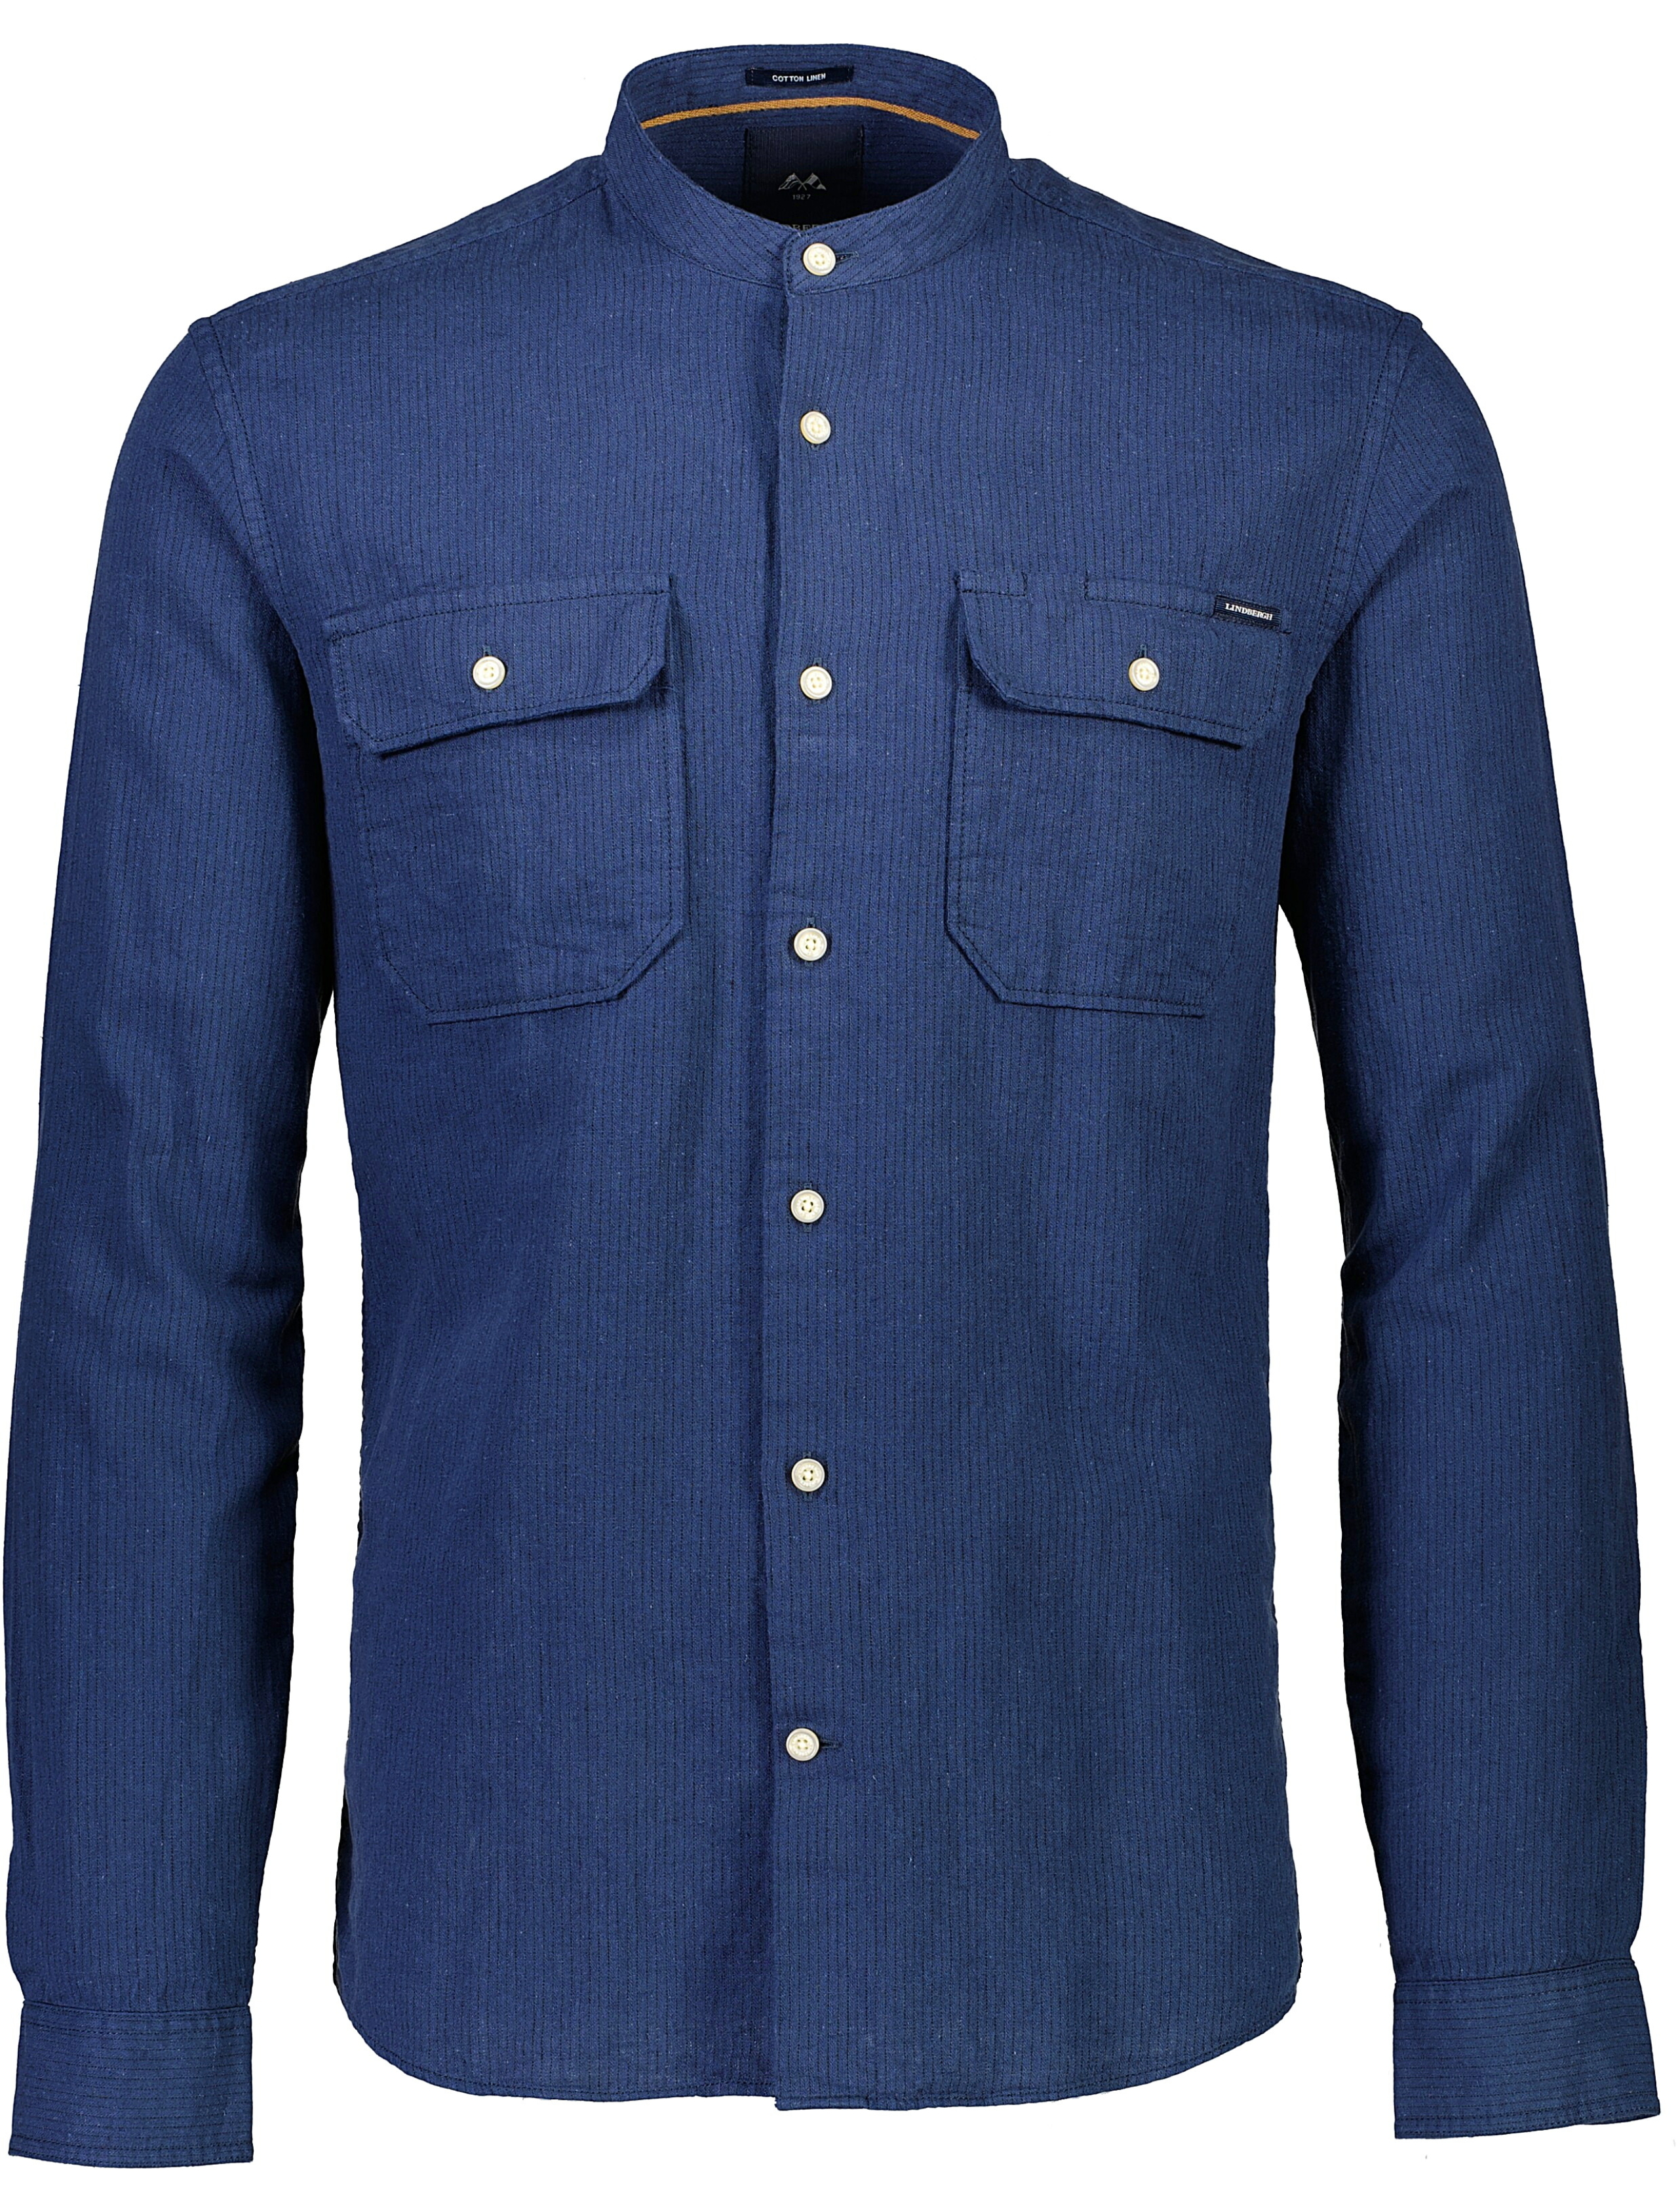 Lindbergh Casual shirt blue / dk blue